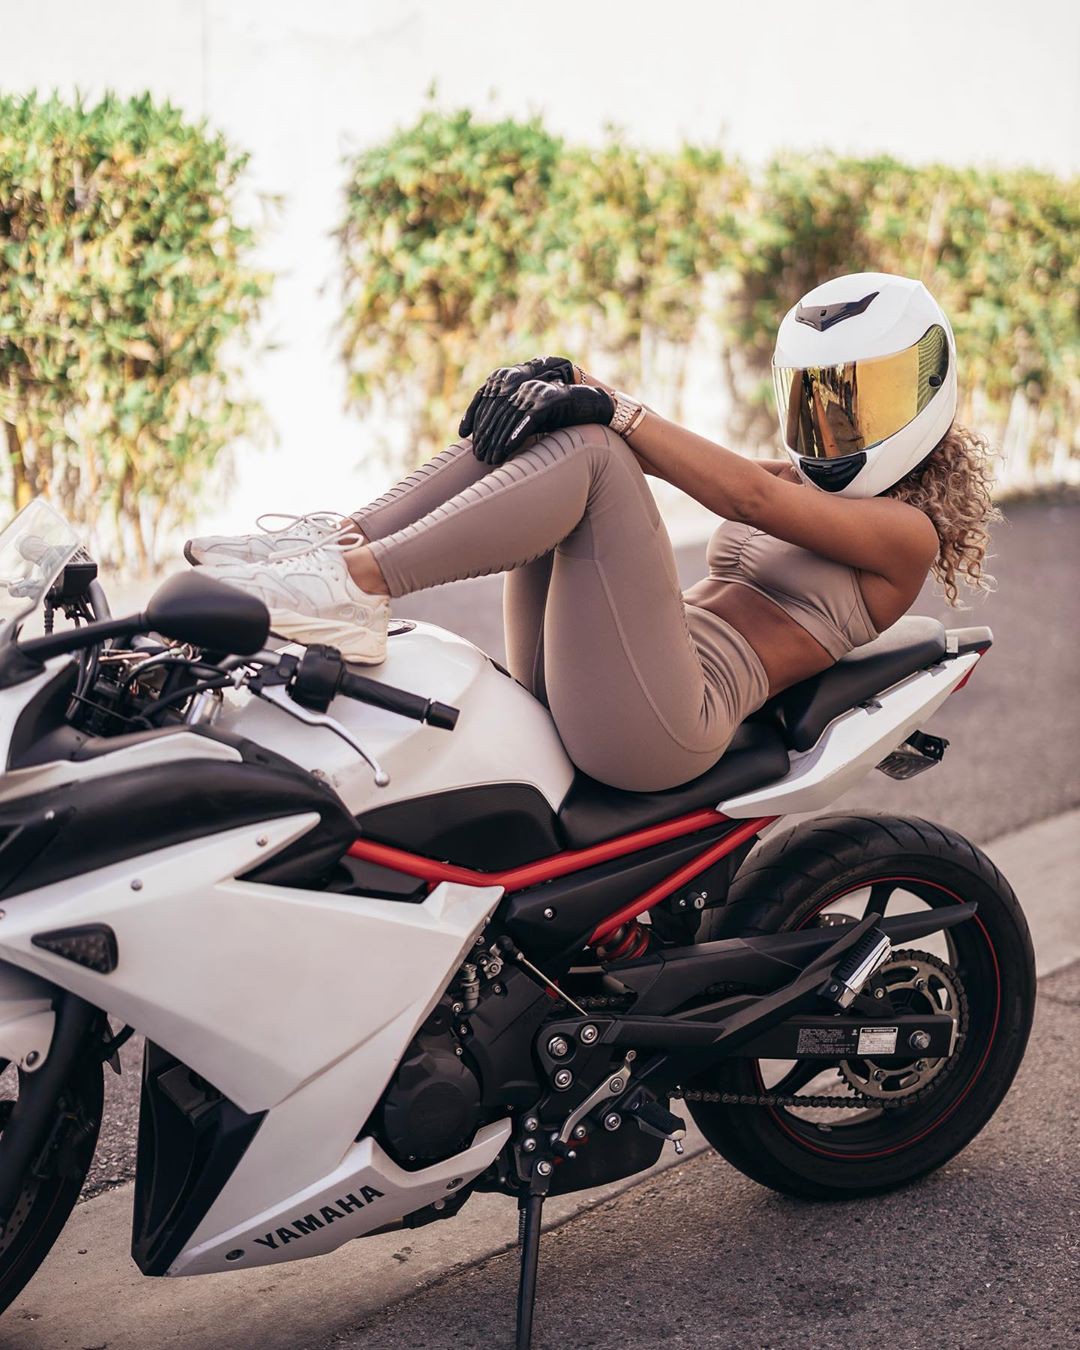 Jena Frumes, personal protective equipment, motorcycle helmet, automotive design: Instagram girls  